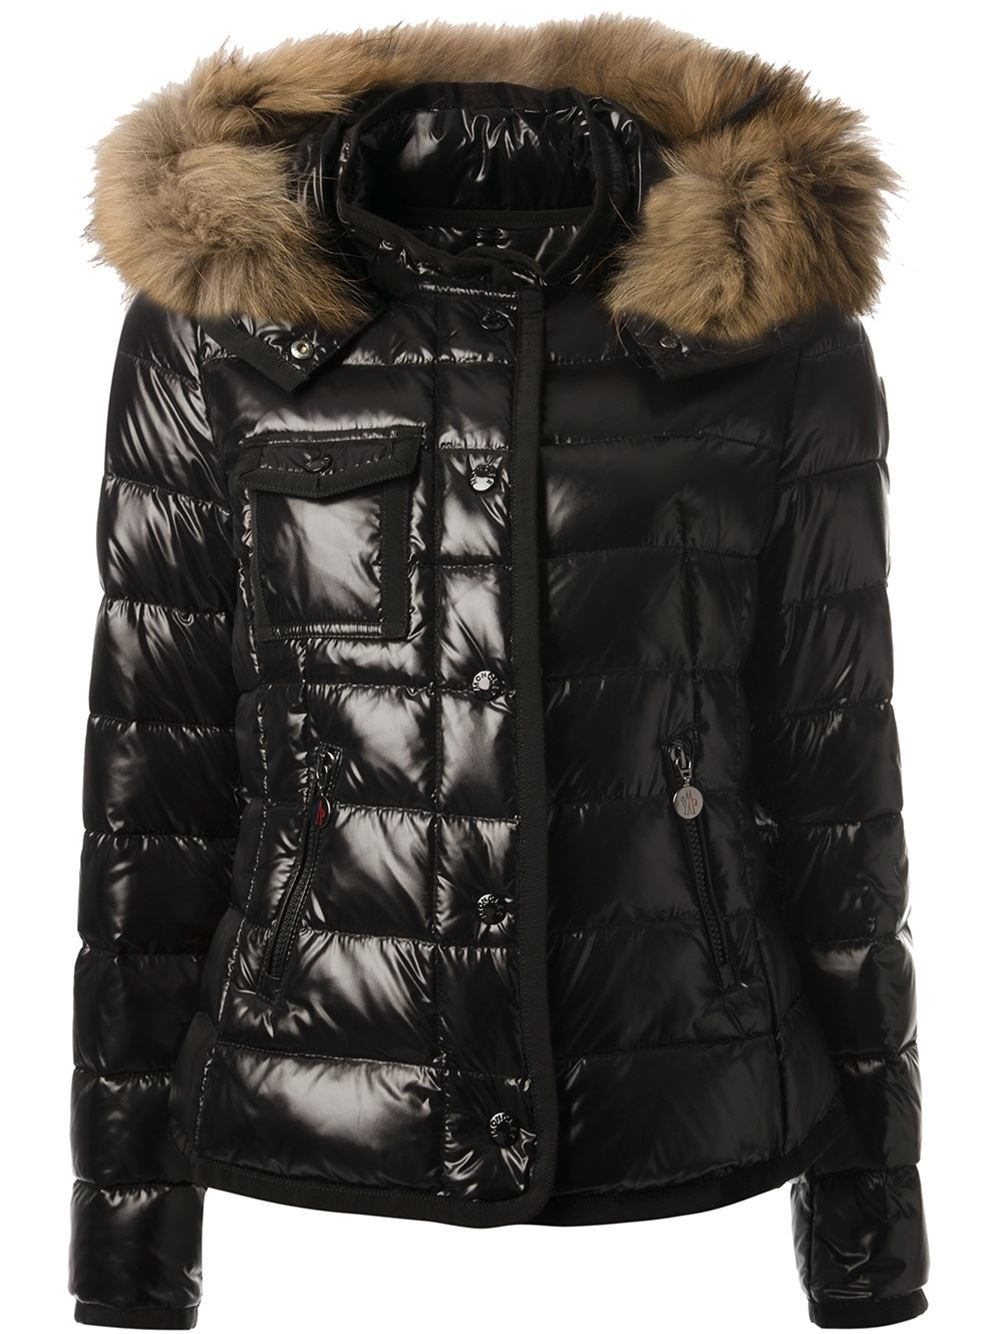 black shiny moncler coat with fur hood Off 65% - adencon.com